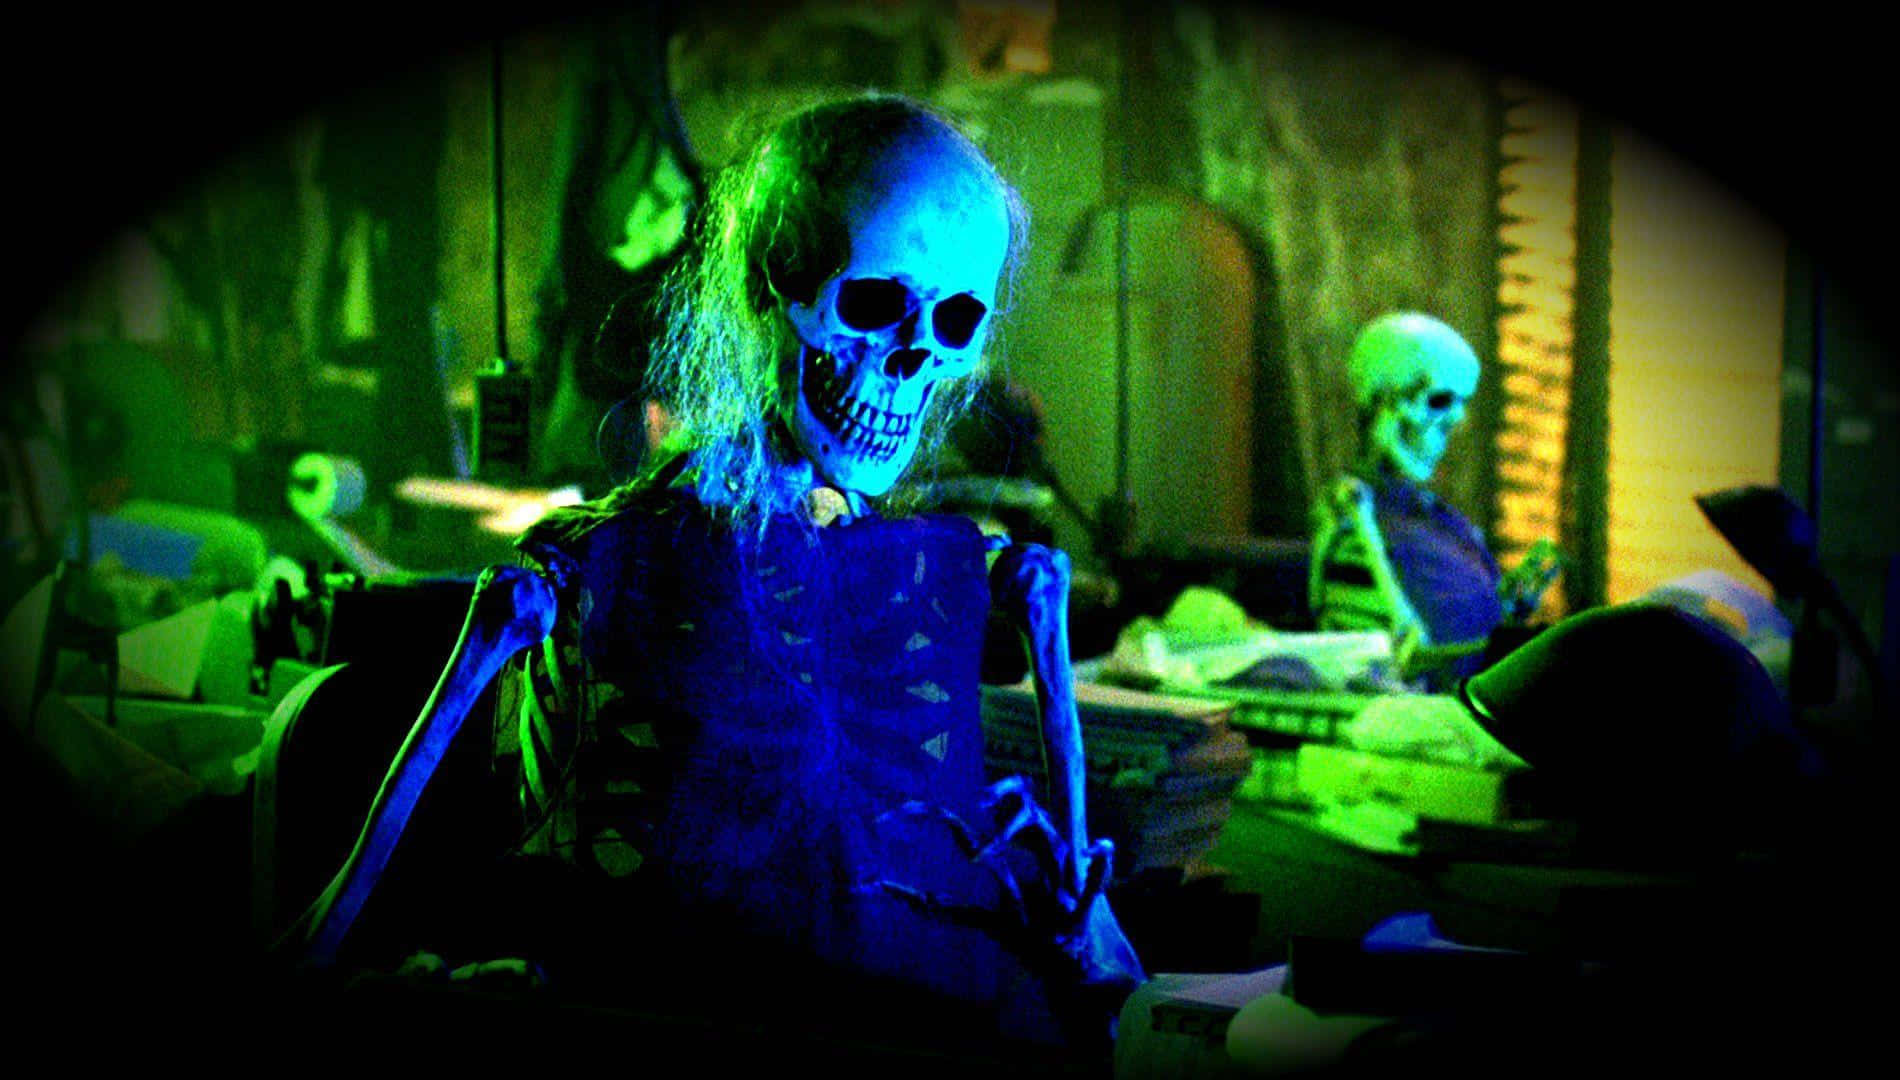 A Skeleton Sitting In A Dark Room